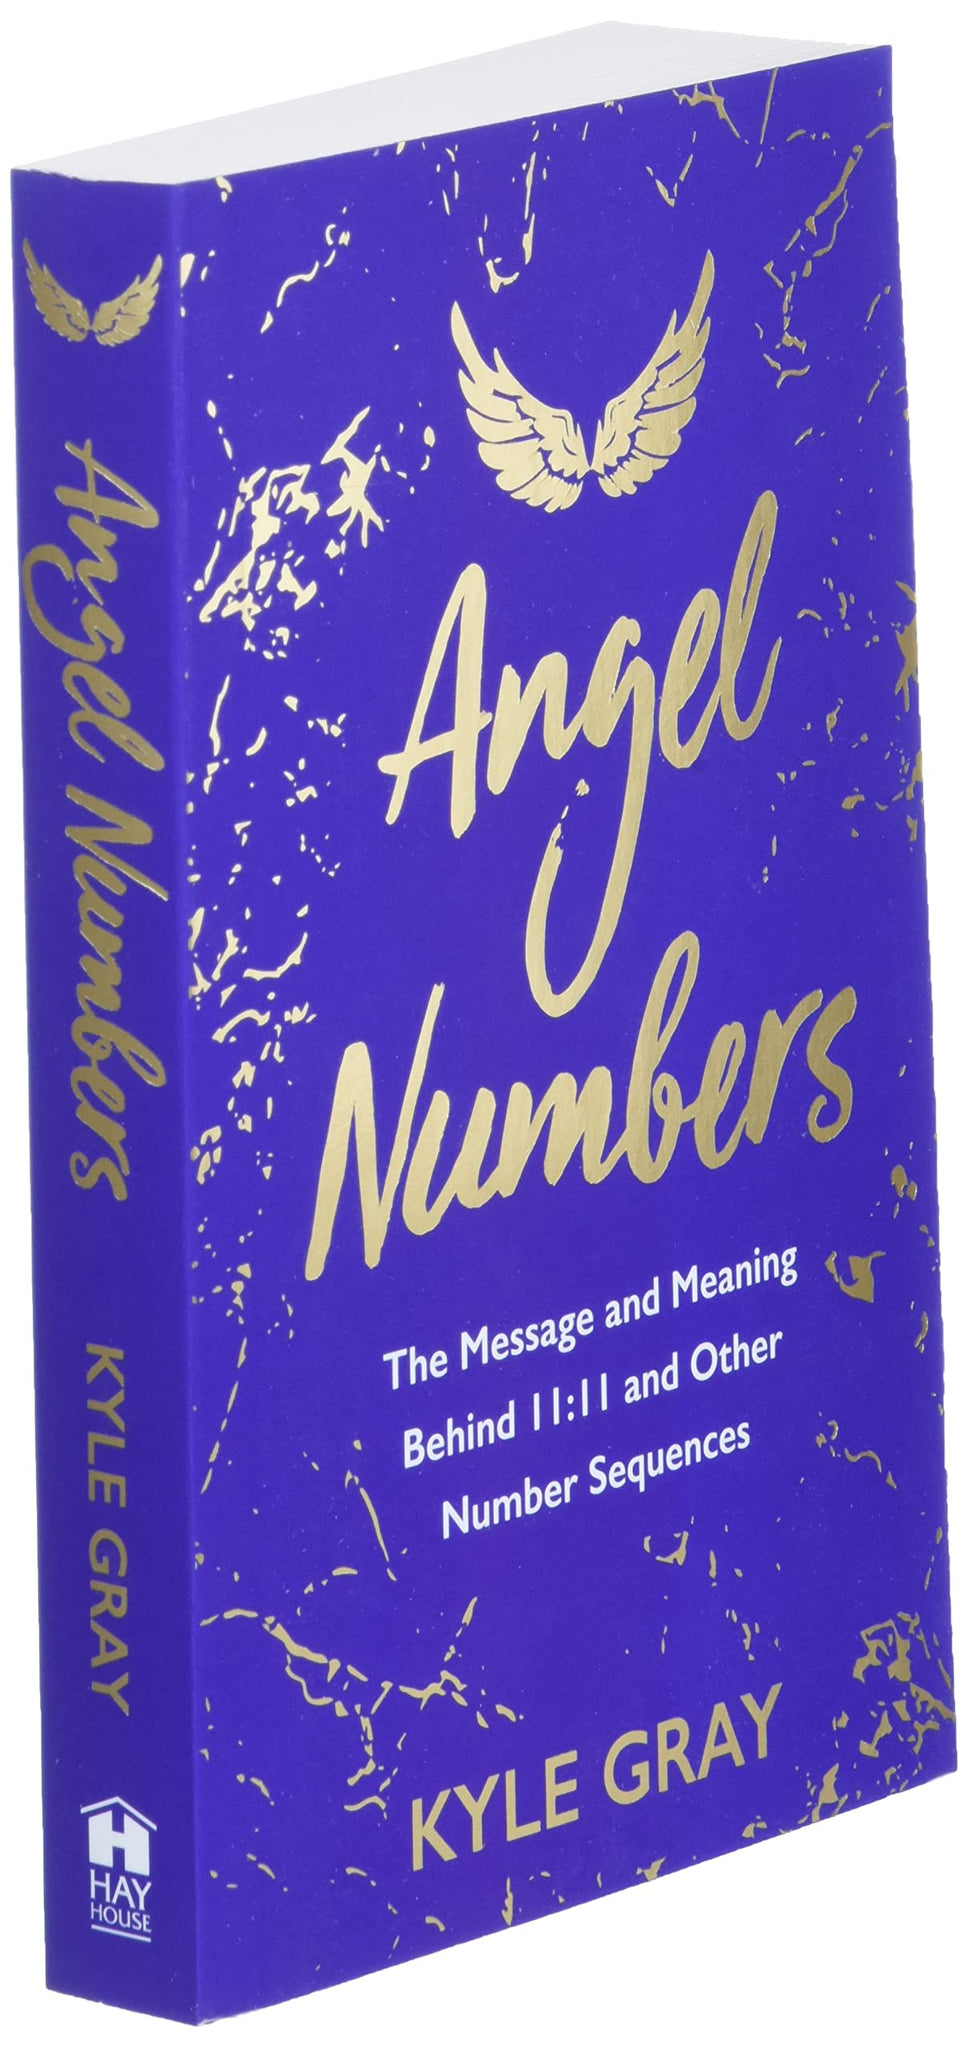 Angel Numbers - Kyle Gray